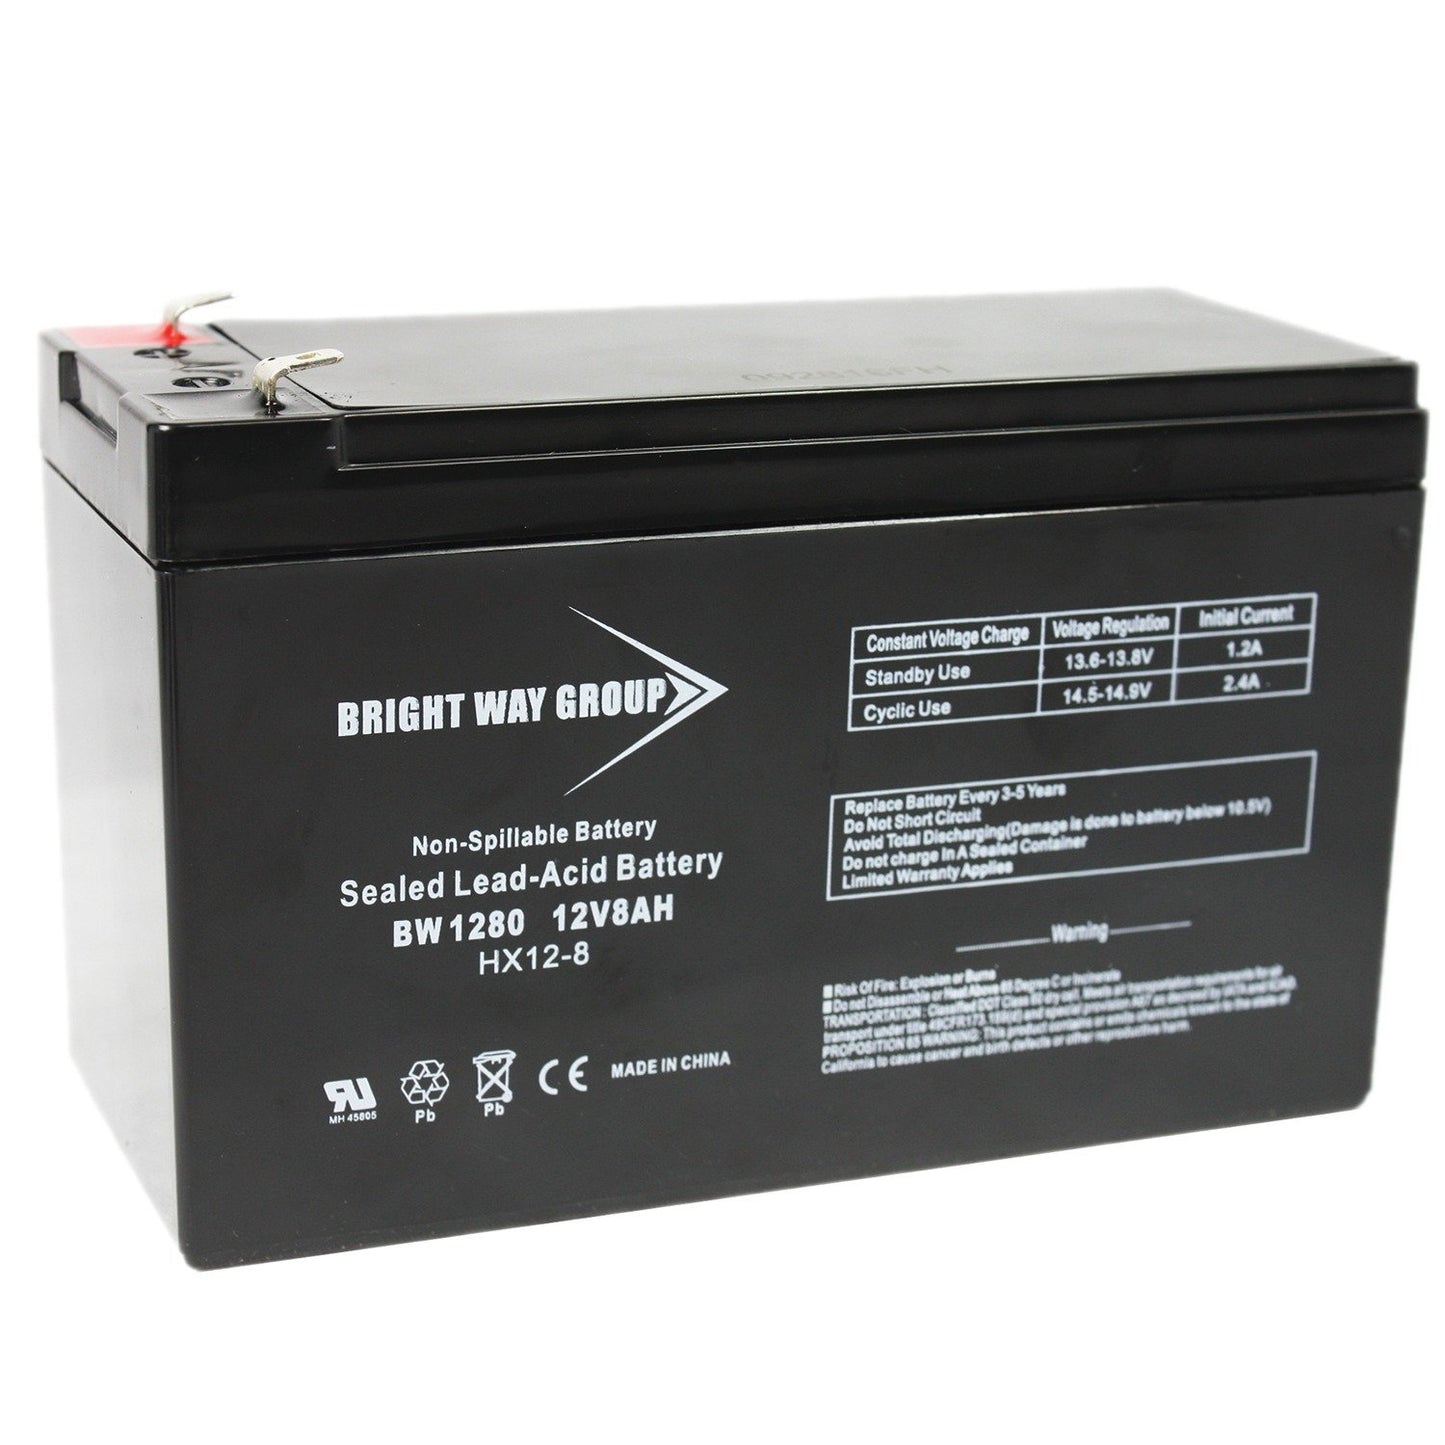 Bright Way Group BW 1280 F2 (0170) BWG 1280 F2 Battery